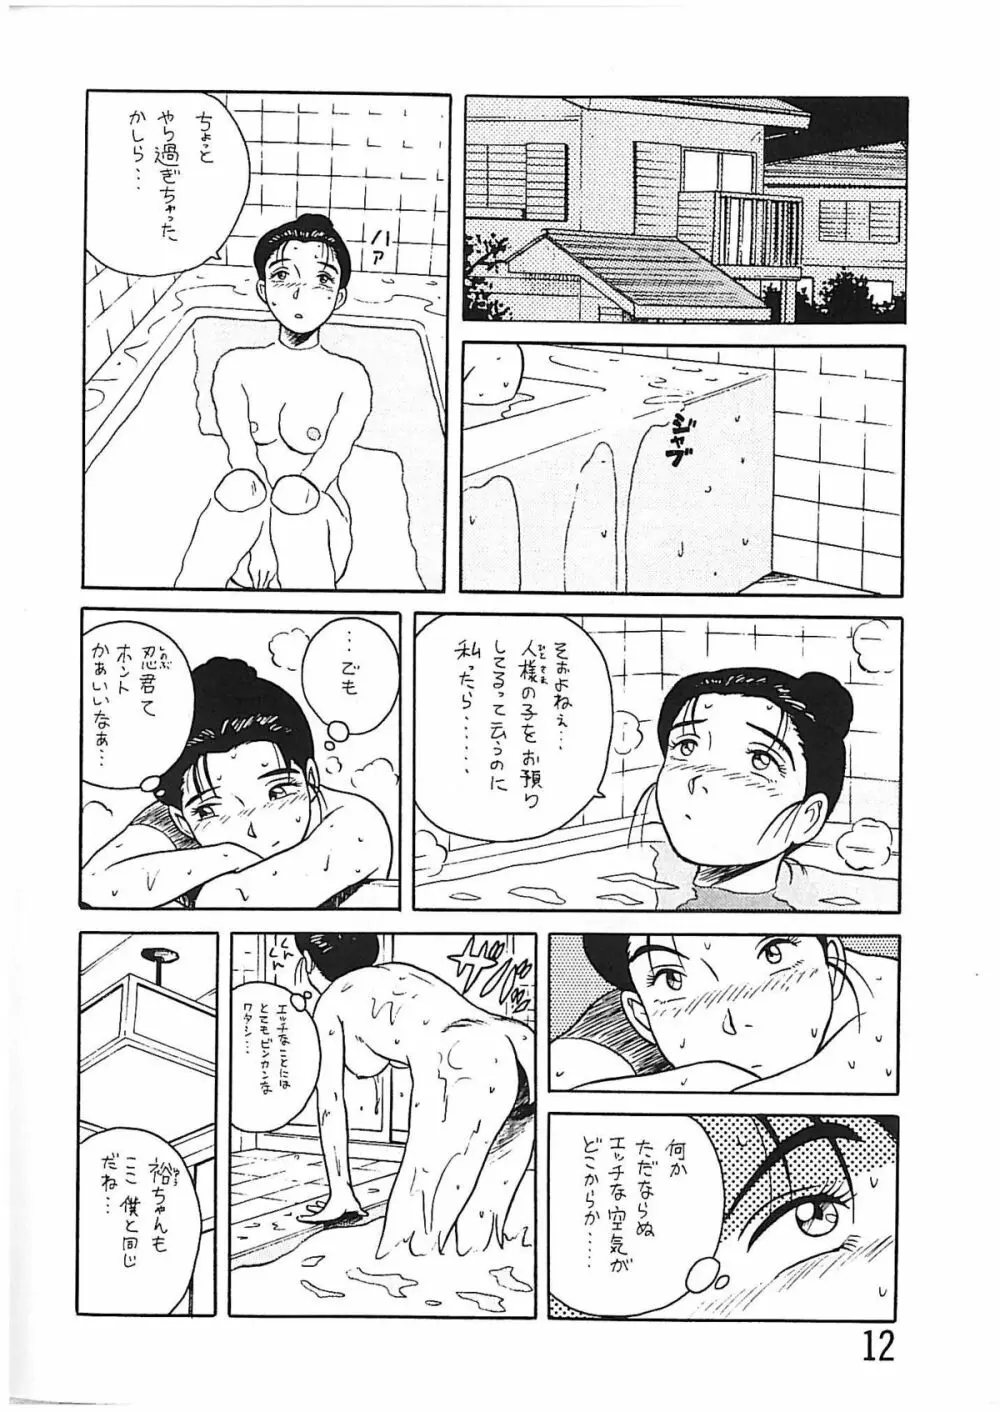 BOY’S LIFE CORE 2 11ページ